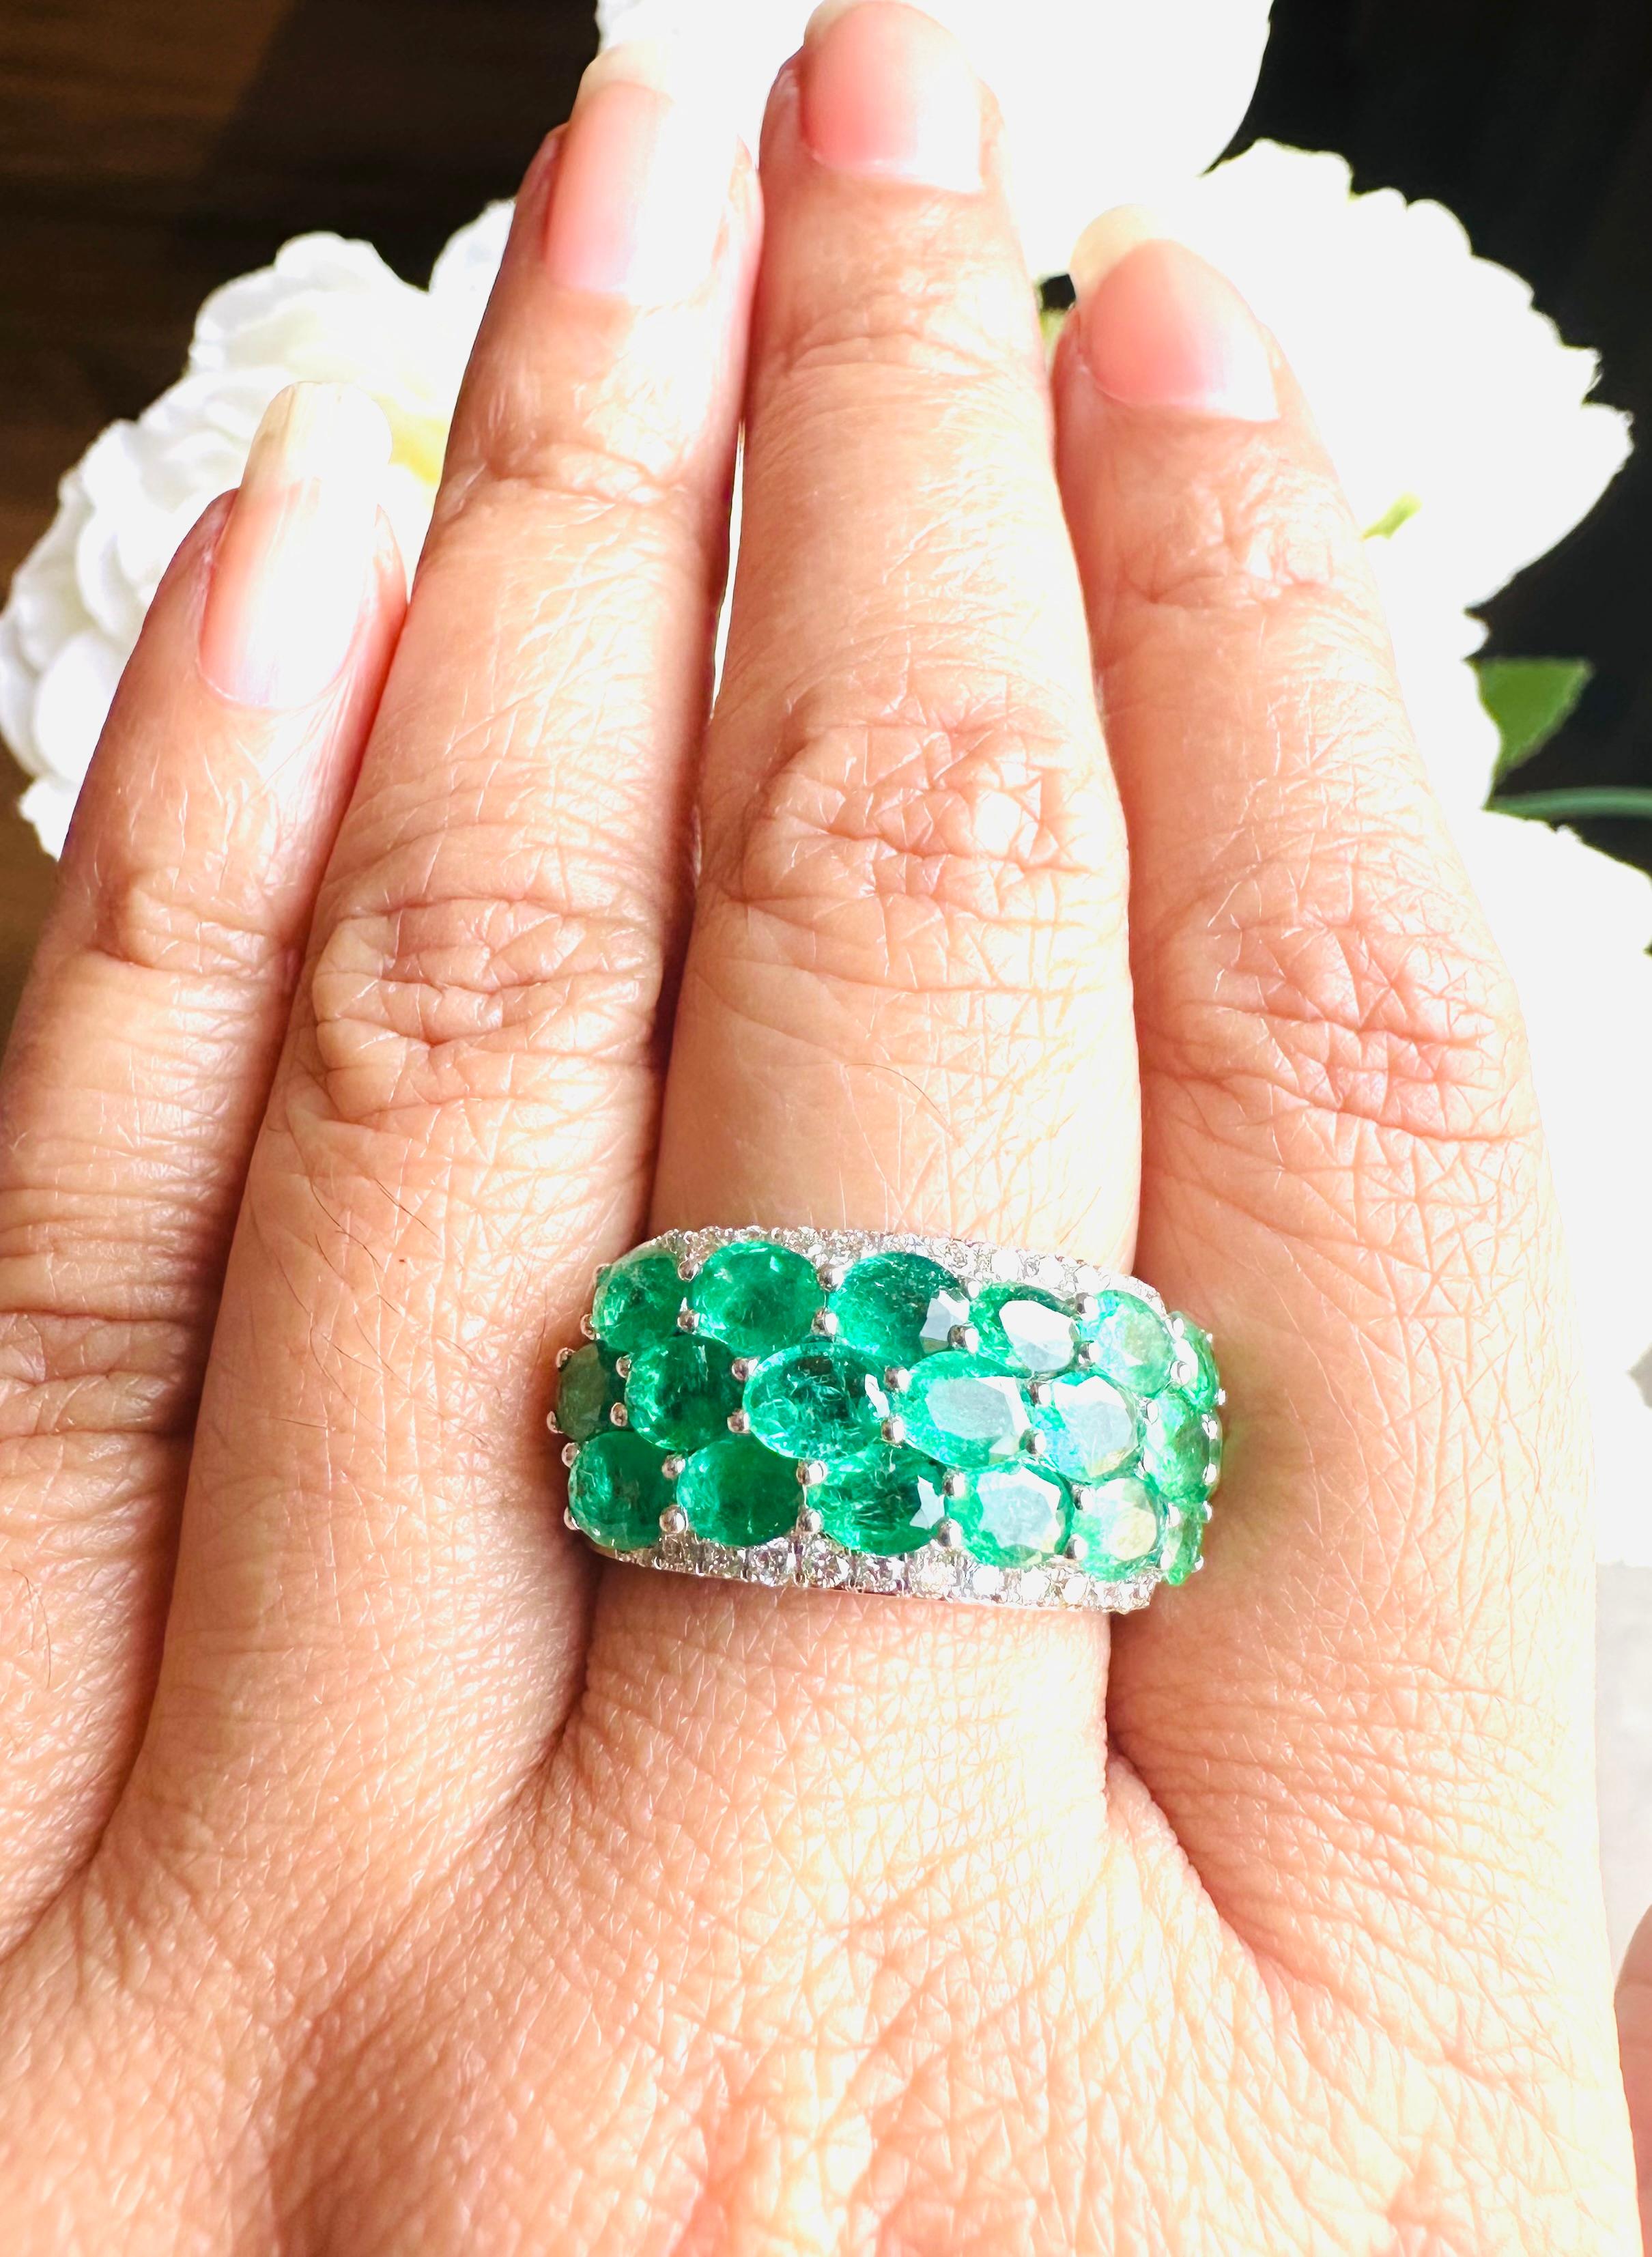 Women's Meghna Jewels 3.93 Carat Oval Cut Emerald Diamond 18 Karat Gold Ring For Sale